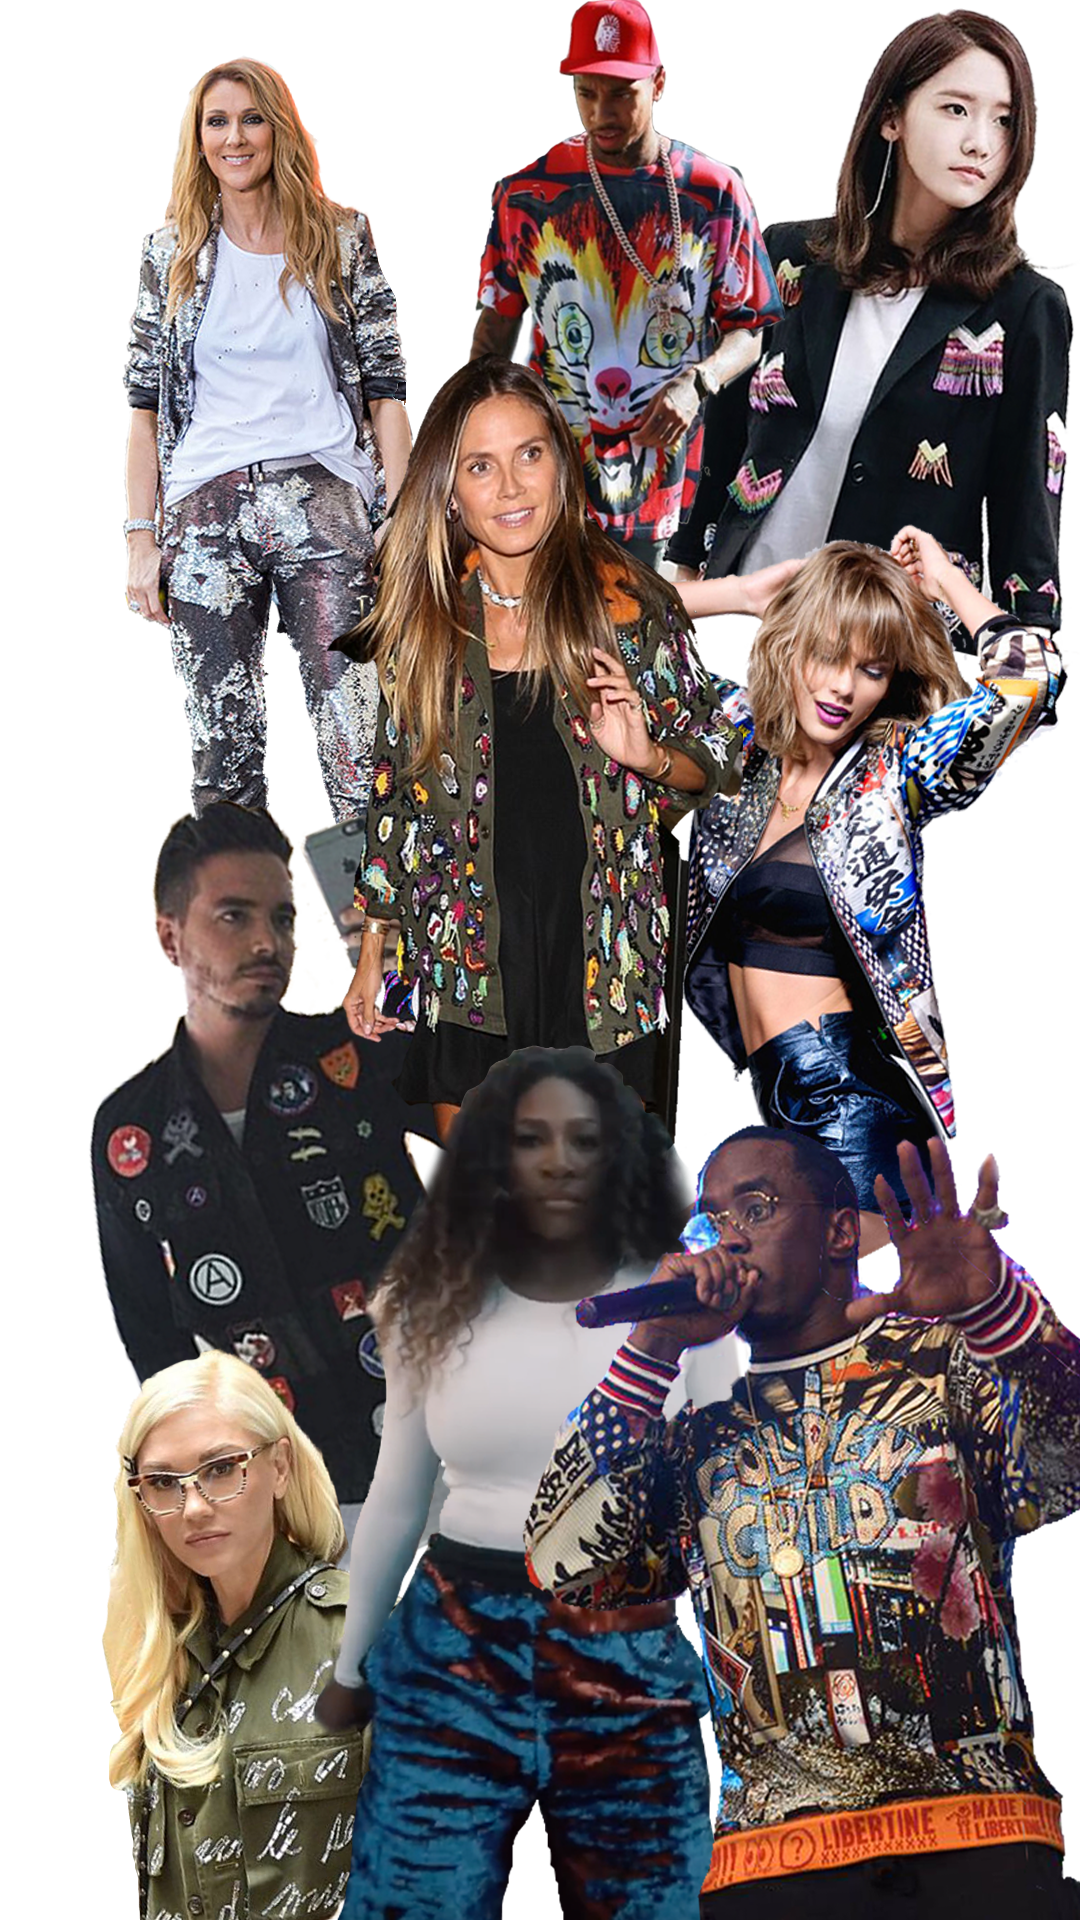 Puff Daddy, Serena Williams, Gwen Stefani, Tyga, Taylor Swift, J Balvin, Im Yoona of Girls Generation wearing Libertine fashions